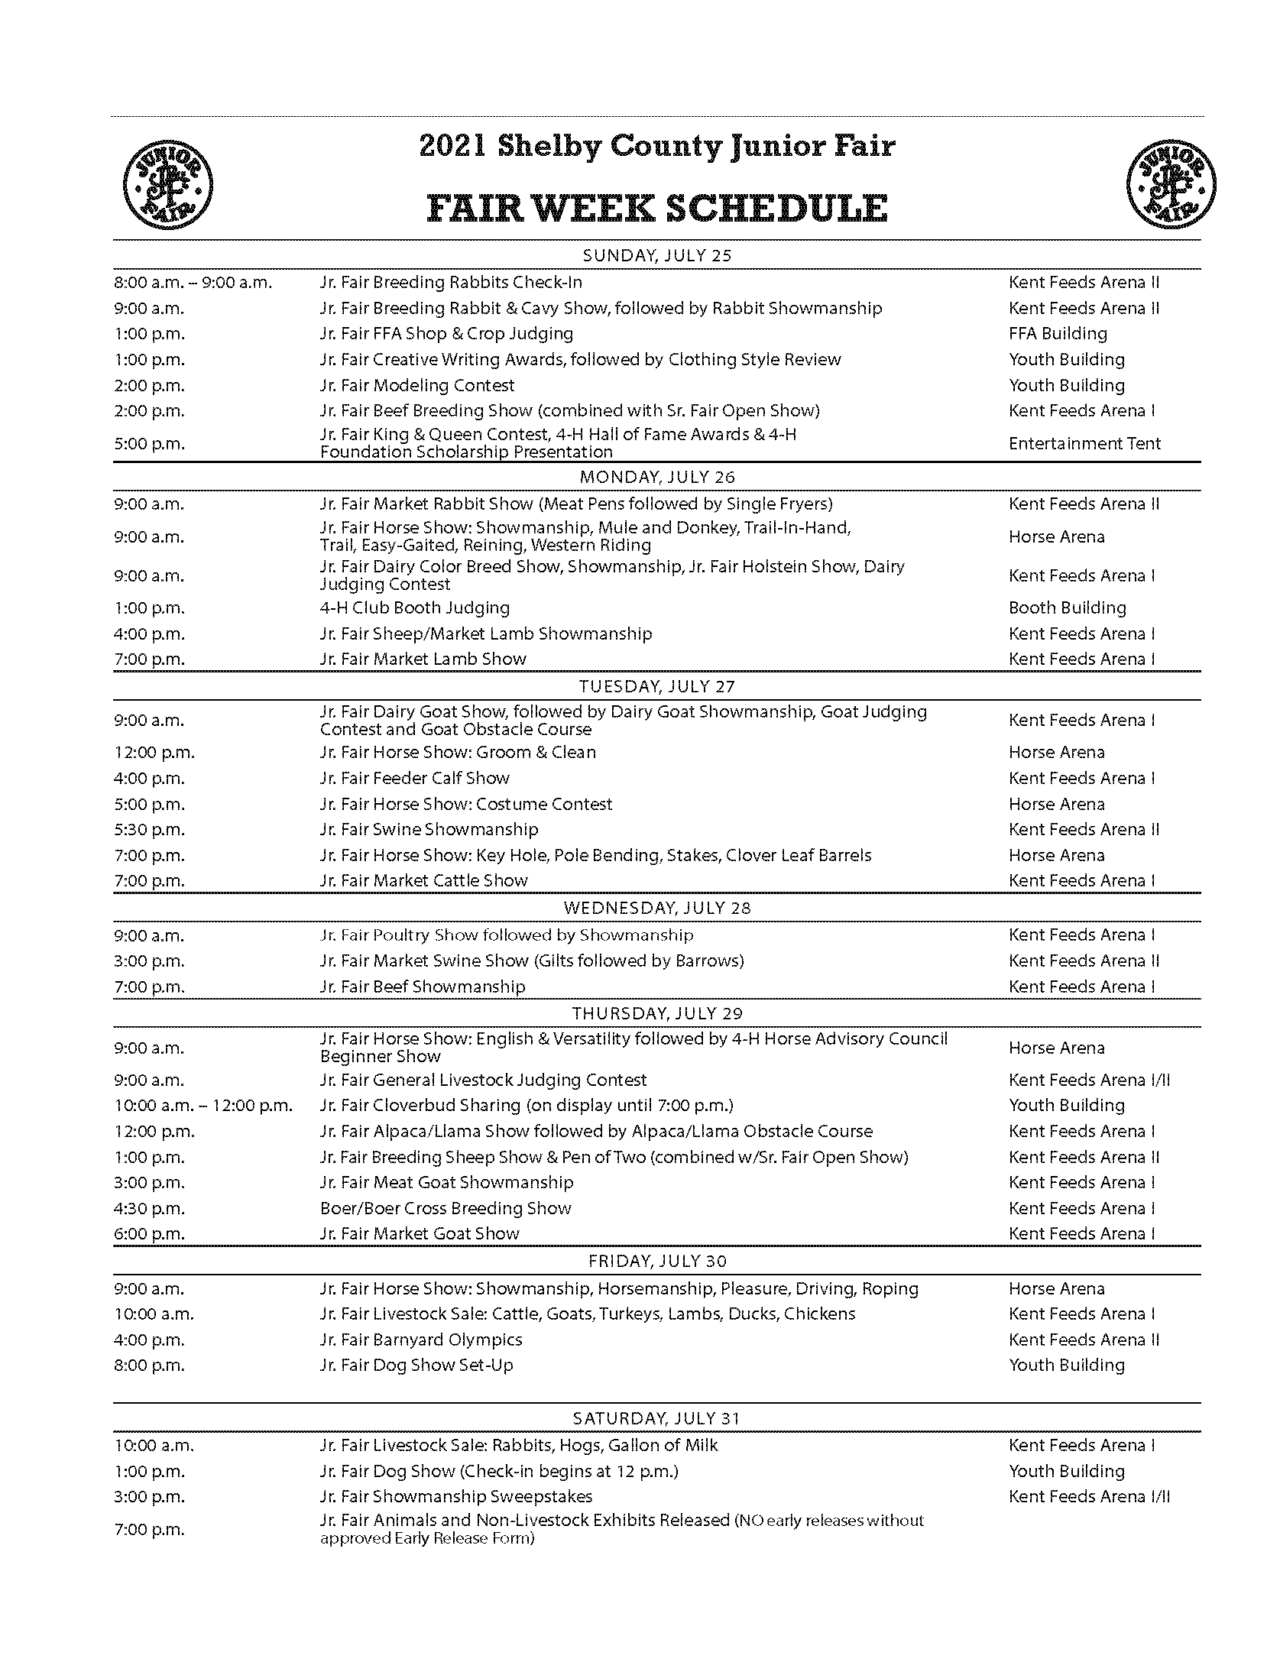 Jr. Fair Schedule Shelby County Fair